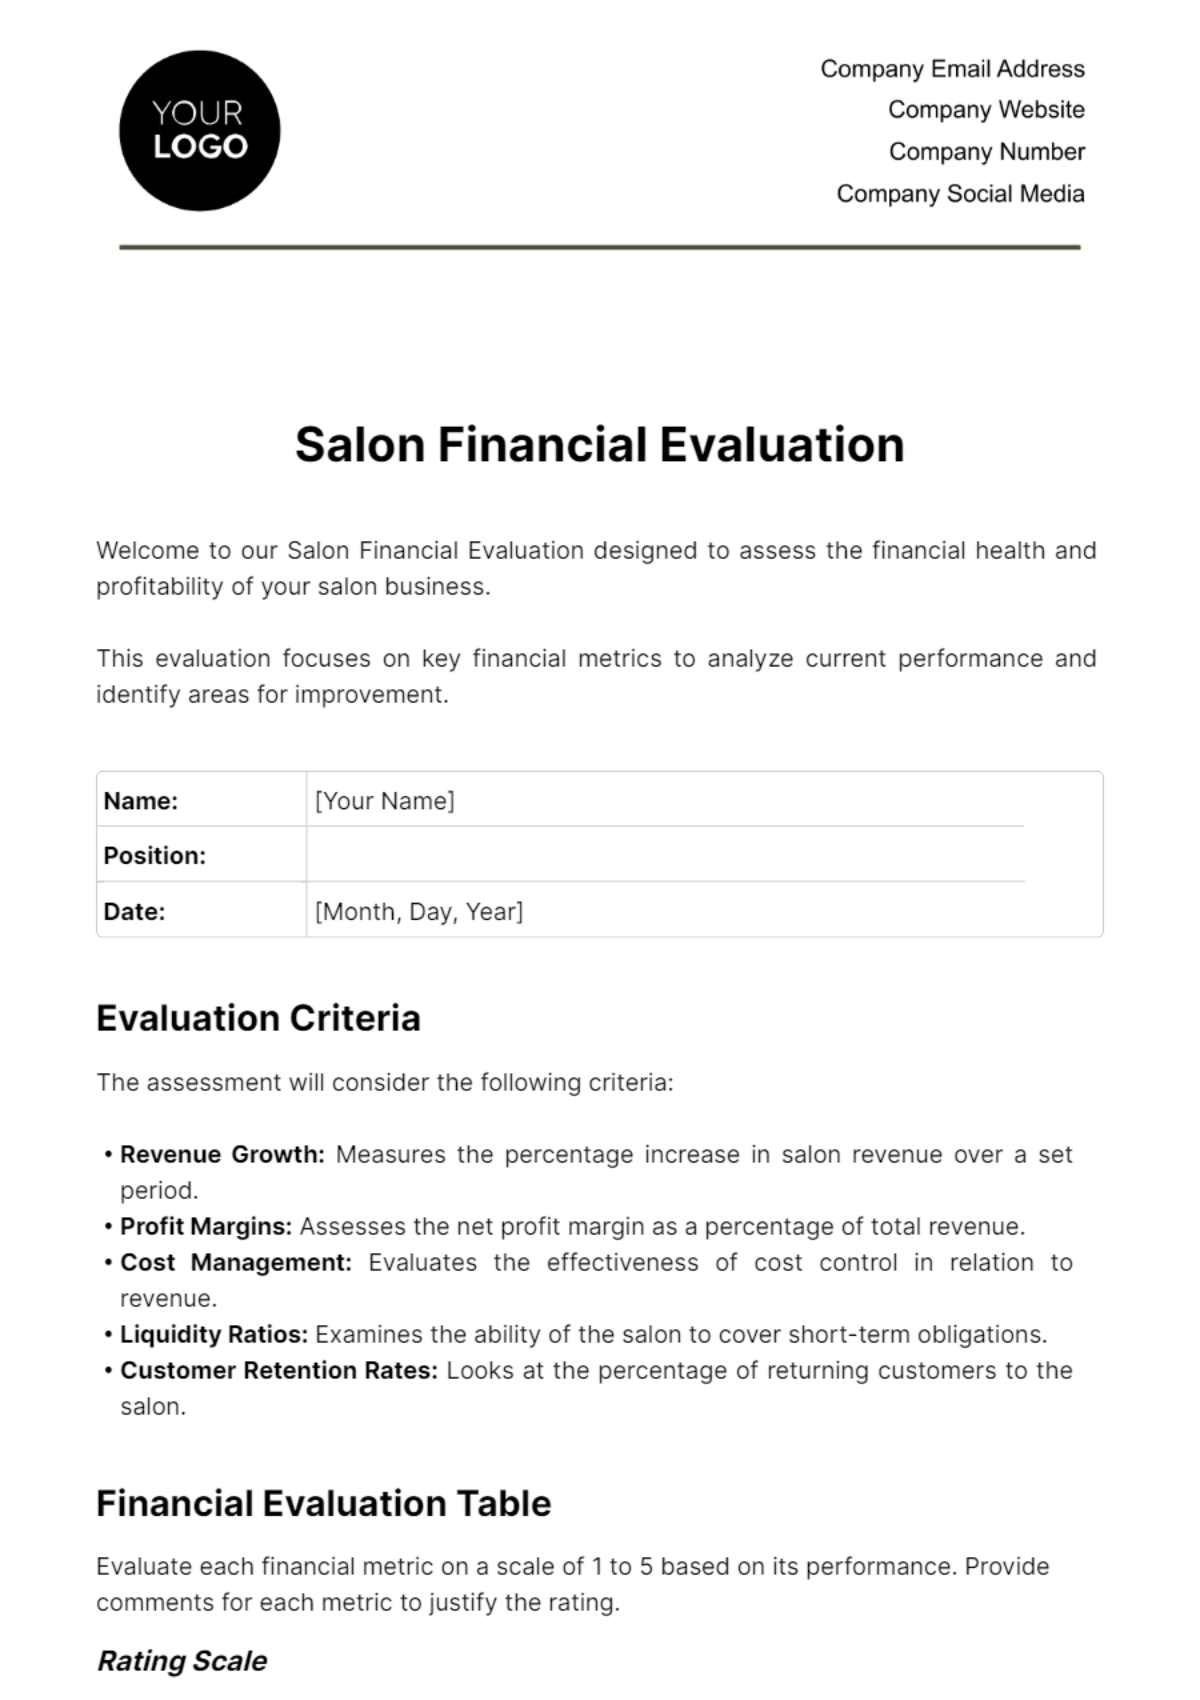 Free Salon Financial Evaluation Template